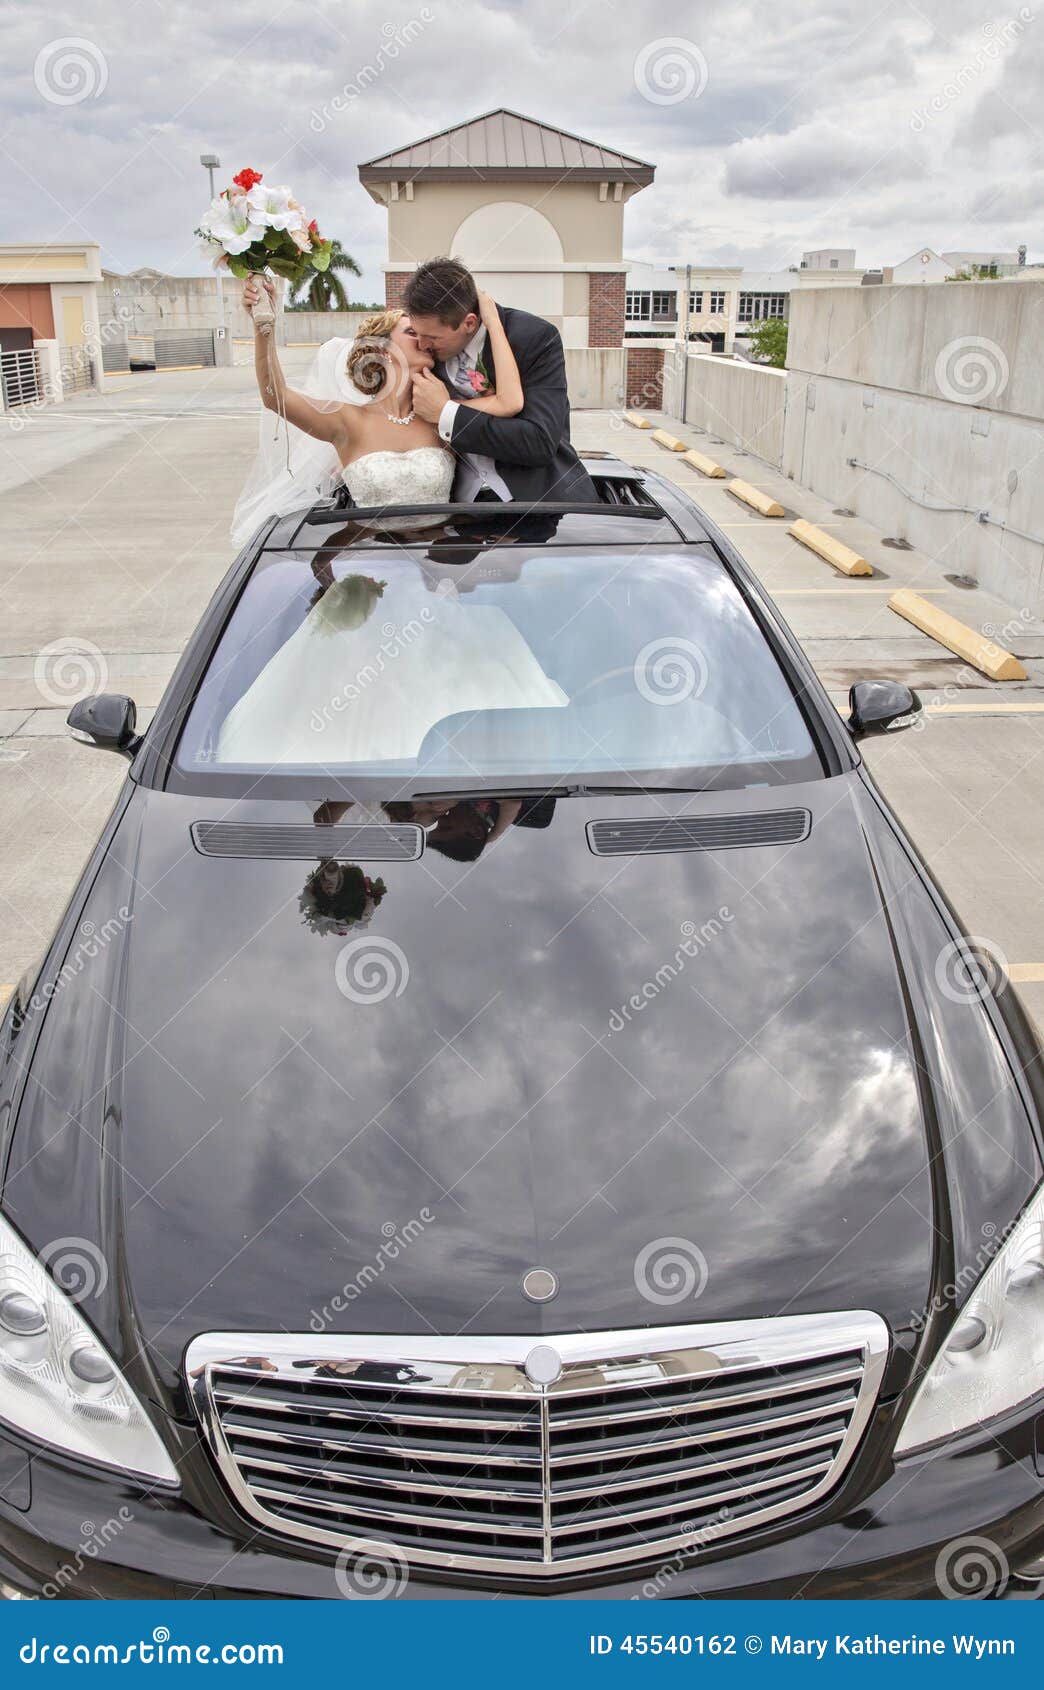 wedding couple in limousine sunroof